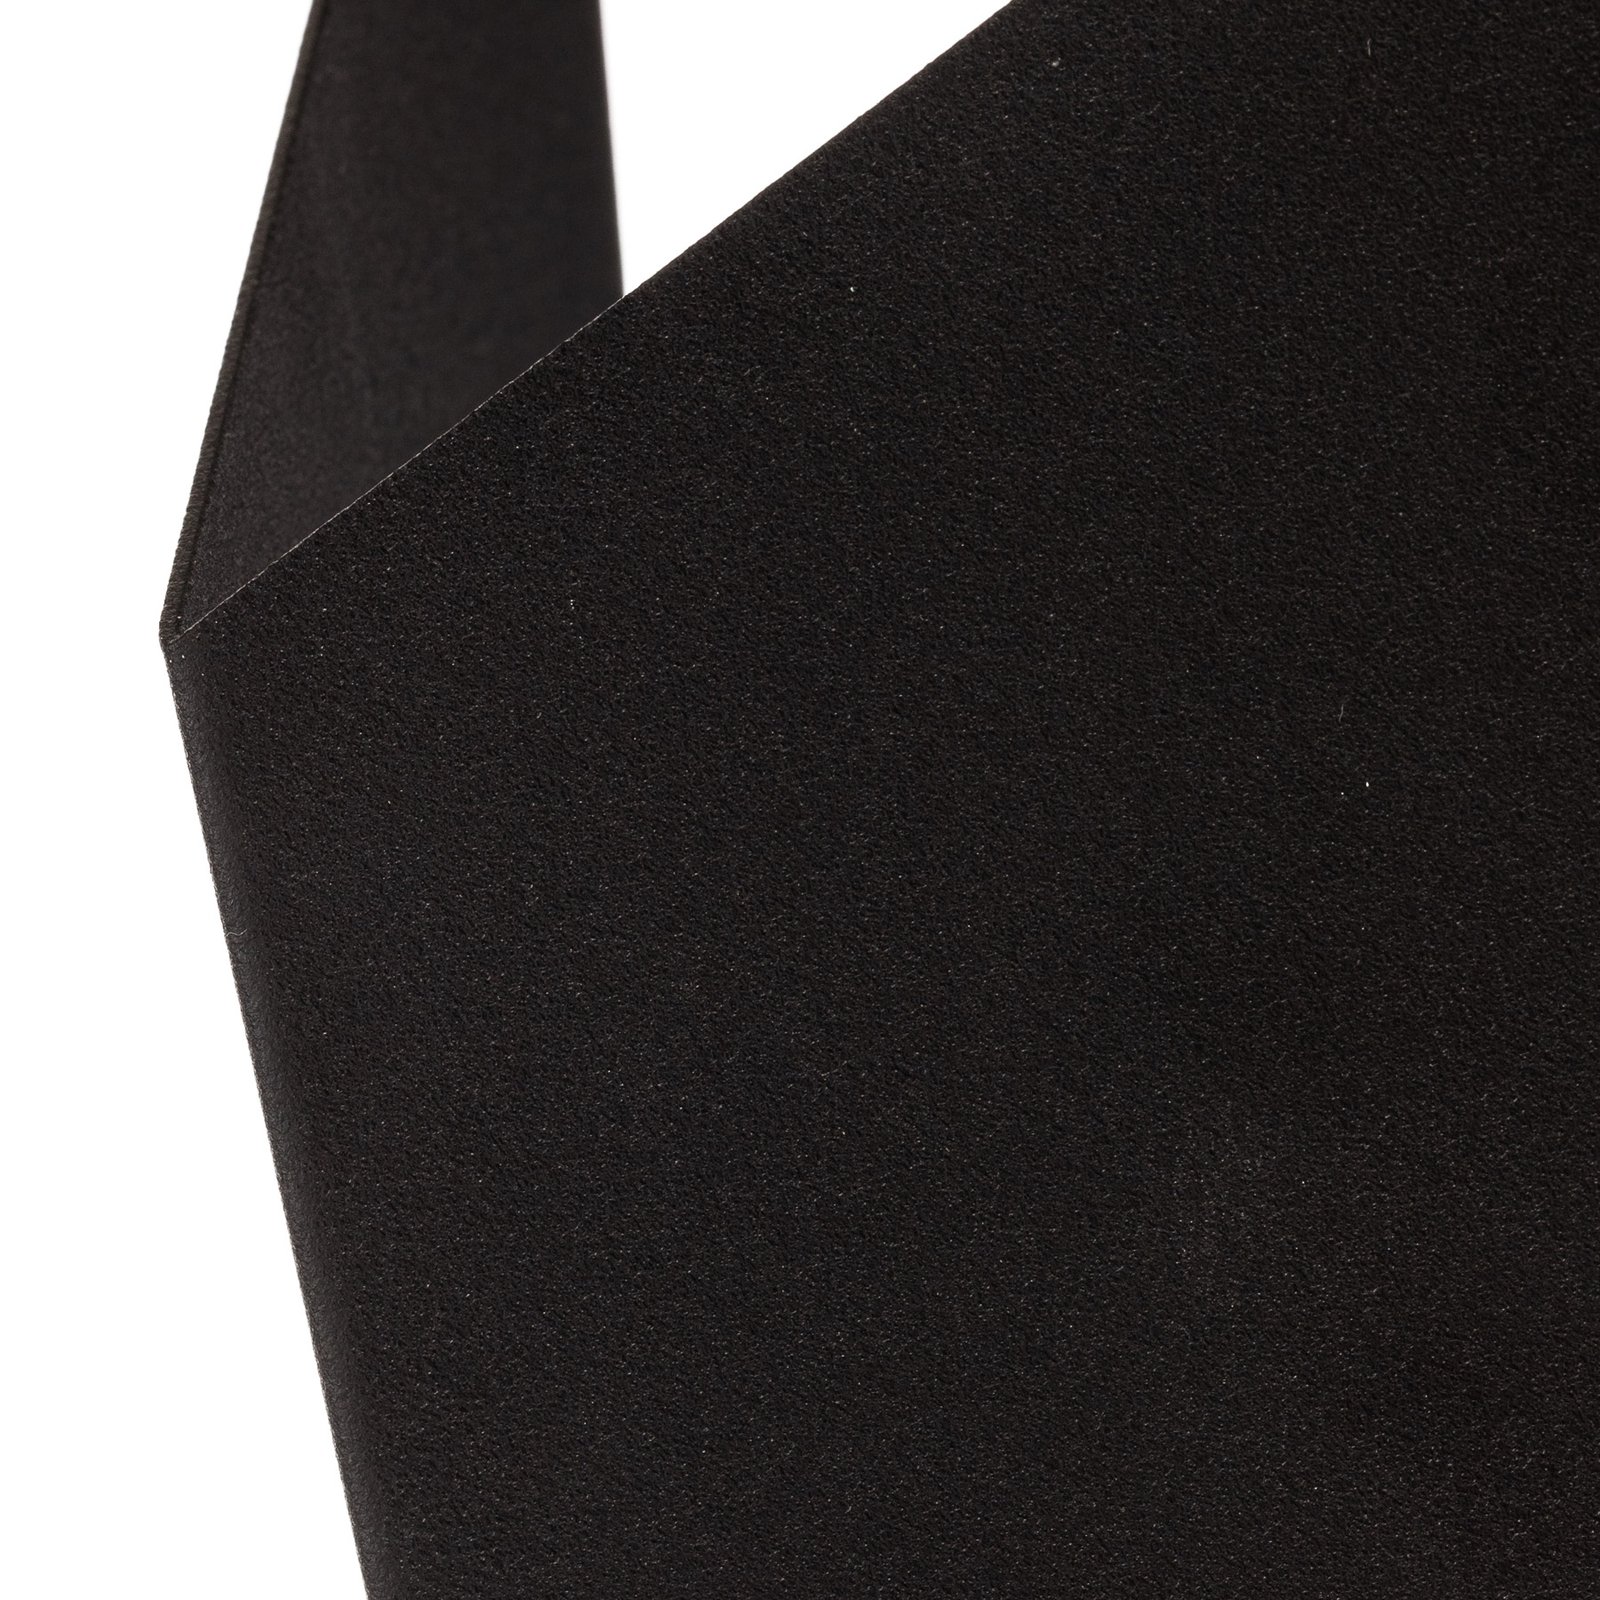 Wandleuchte Form 4, schwarz, 19 x 30 cm